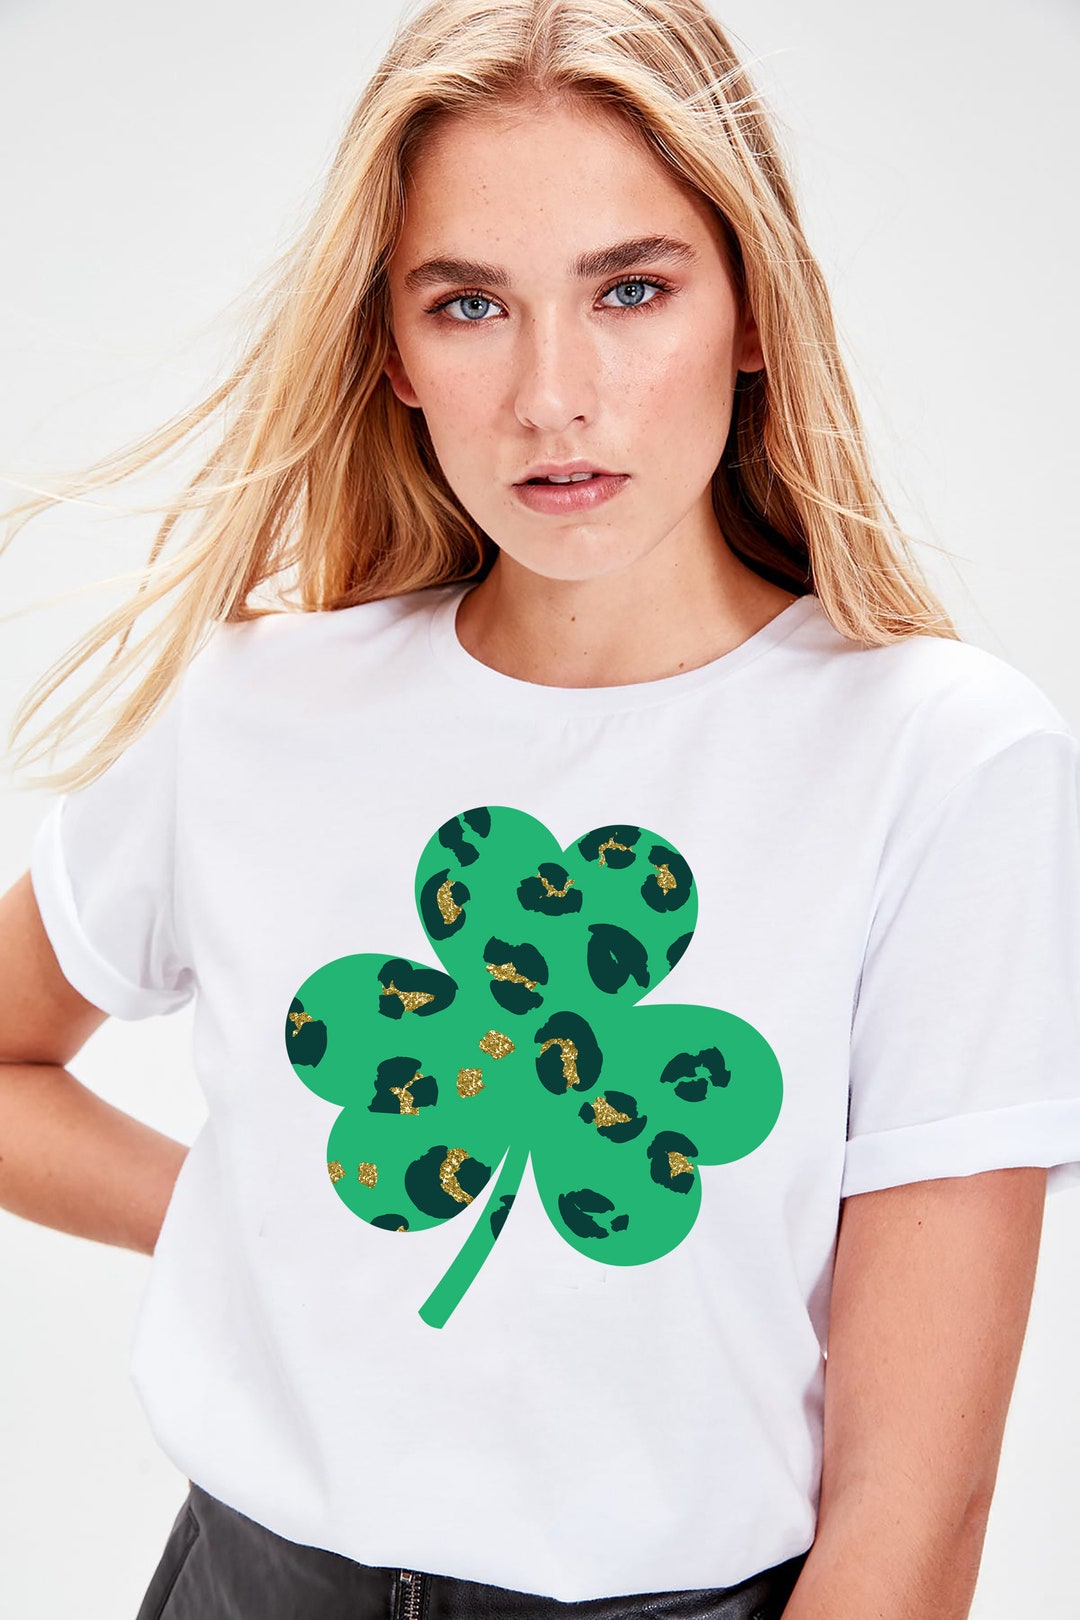 Leopard Shamrock Shirt, Womens St Patrick's Day Shirt, Irish Shirt ...